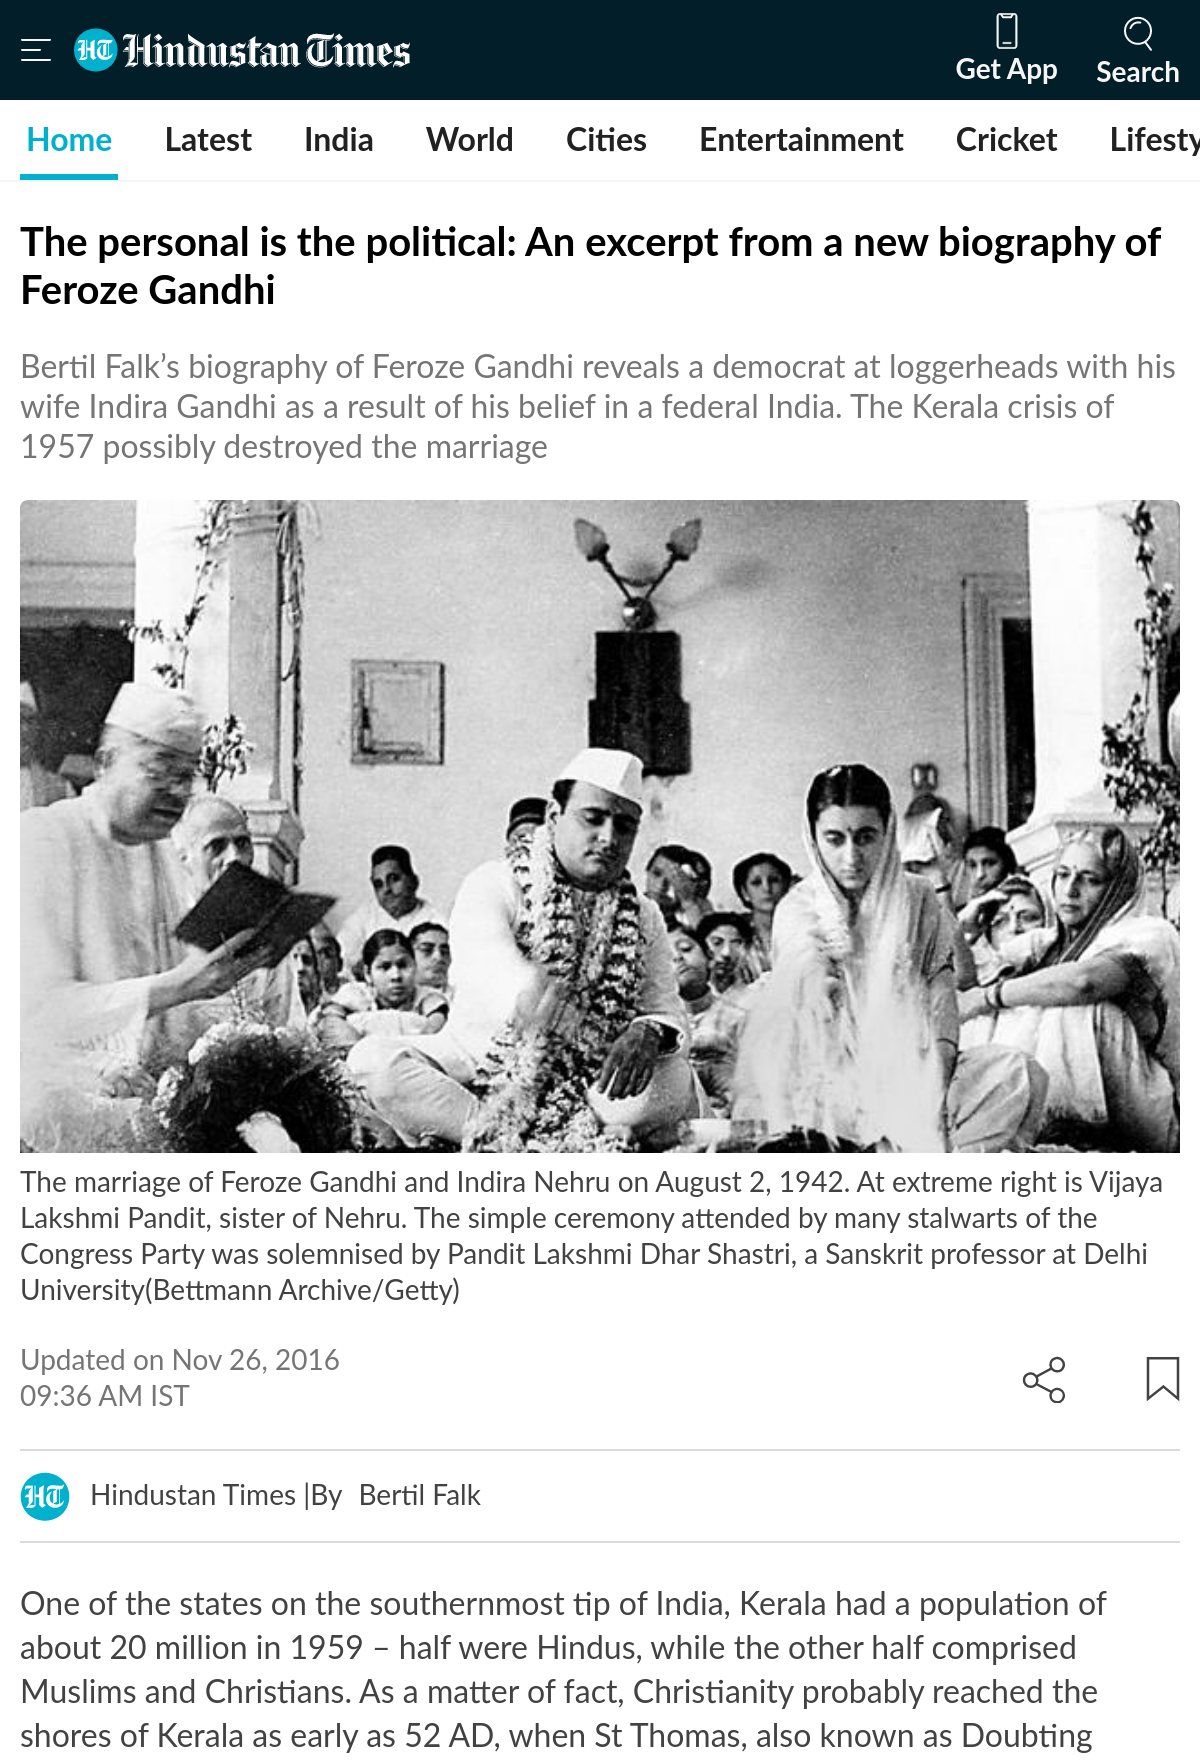 Hindustan Times on Marriage of Indira with Feroze Gandhi